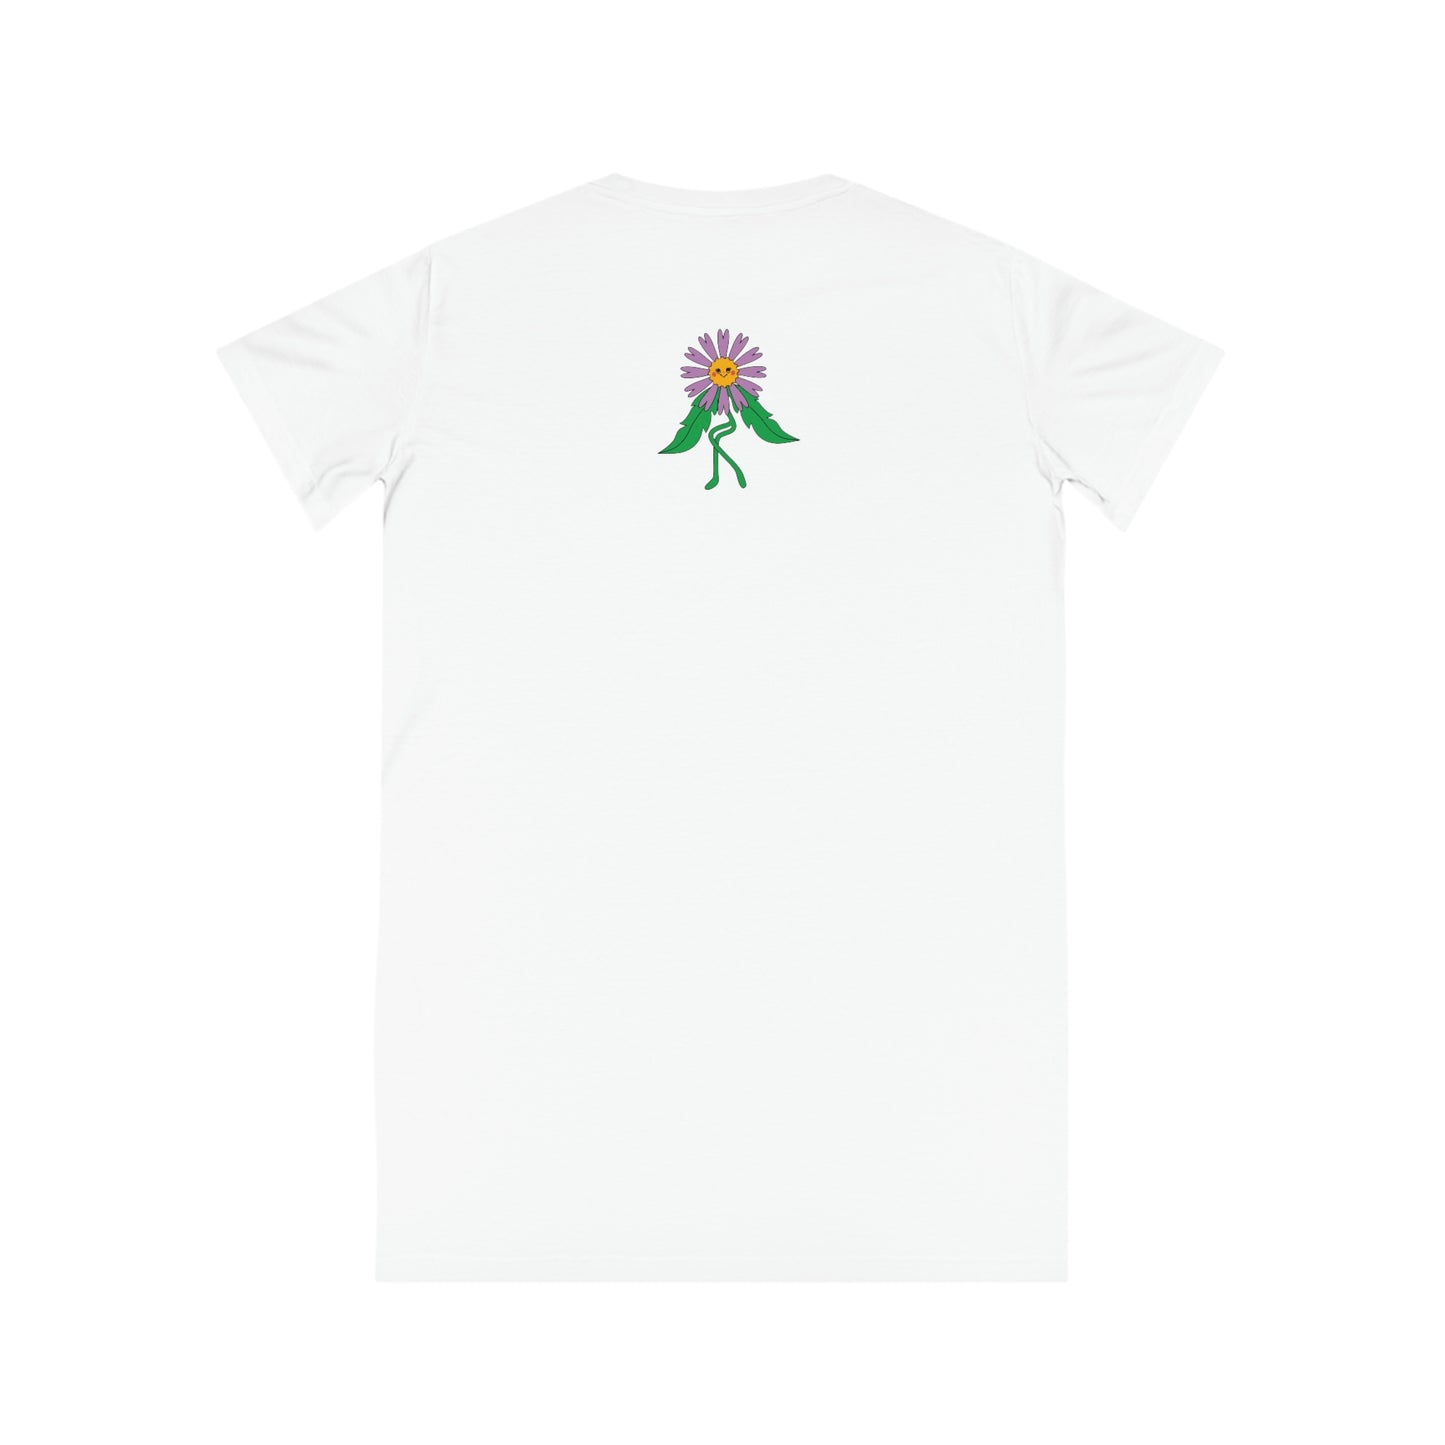 ‘Flower Power’ Printed on Both Sides. Spinner T-Shirt Dress